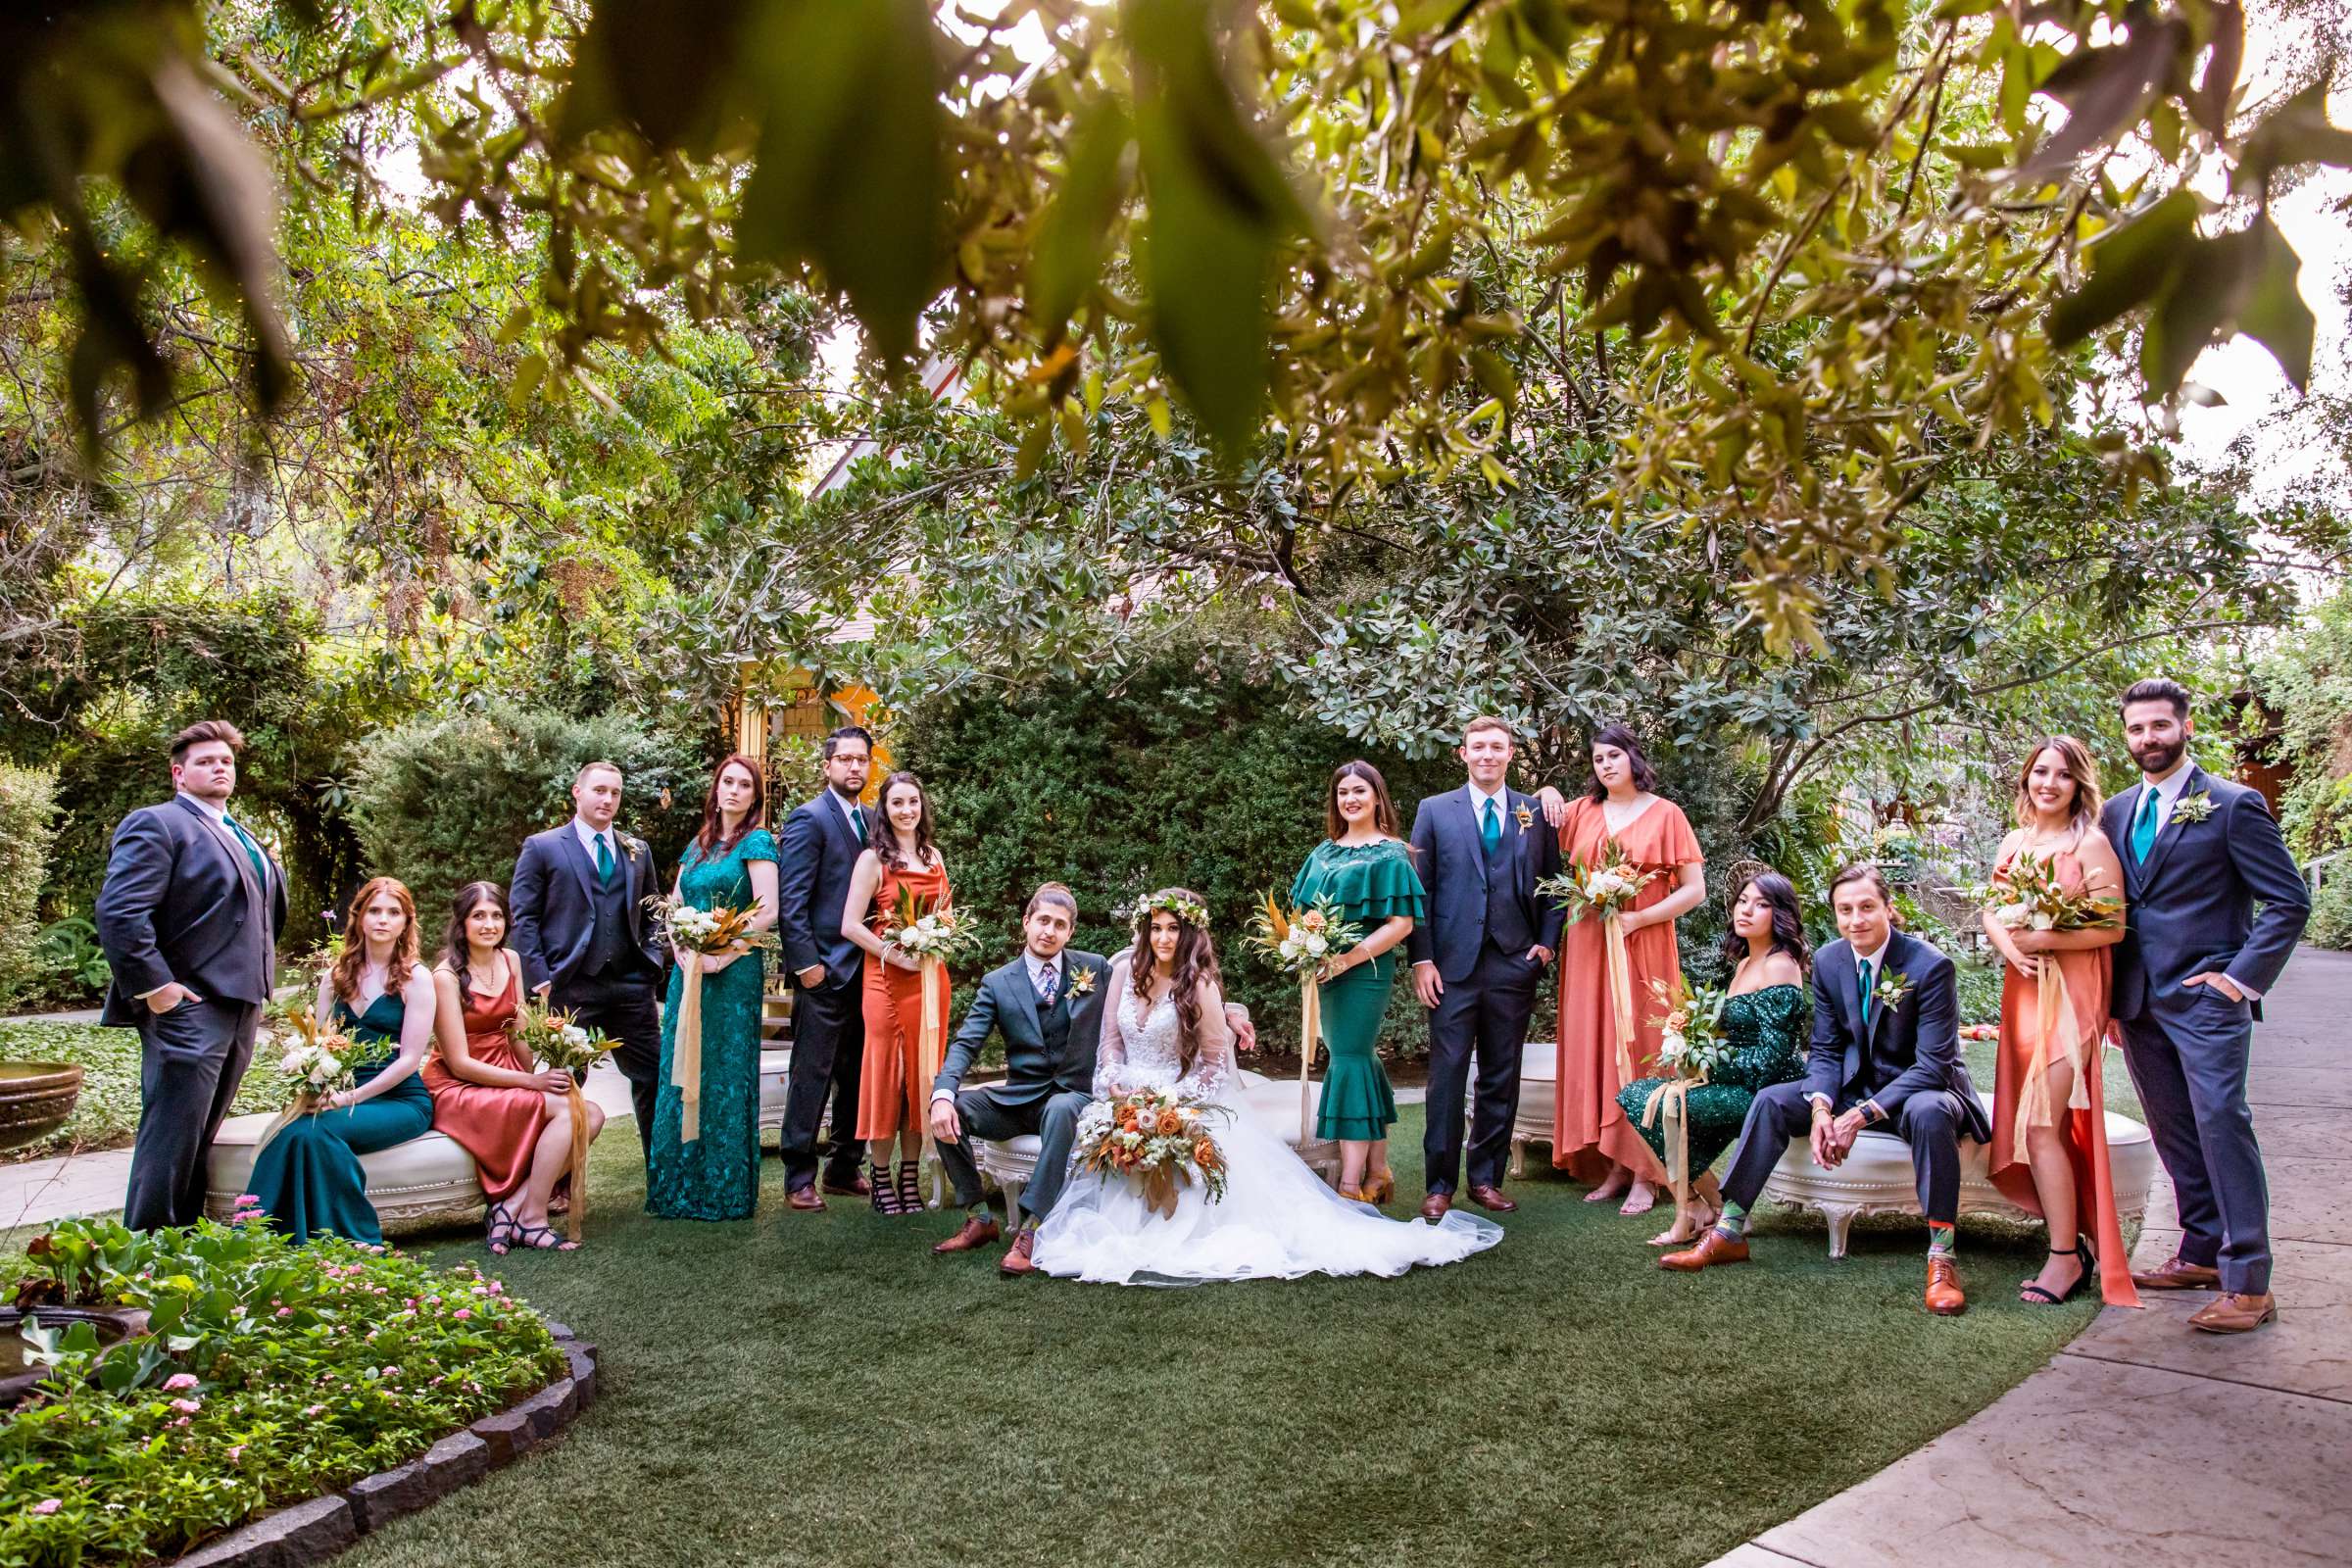 Twin Oaks House & Gardens Wedding Estate Wedding, Vanessa and Nicholas Wedding Photo #7 by True Photography